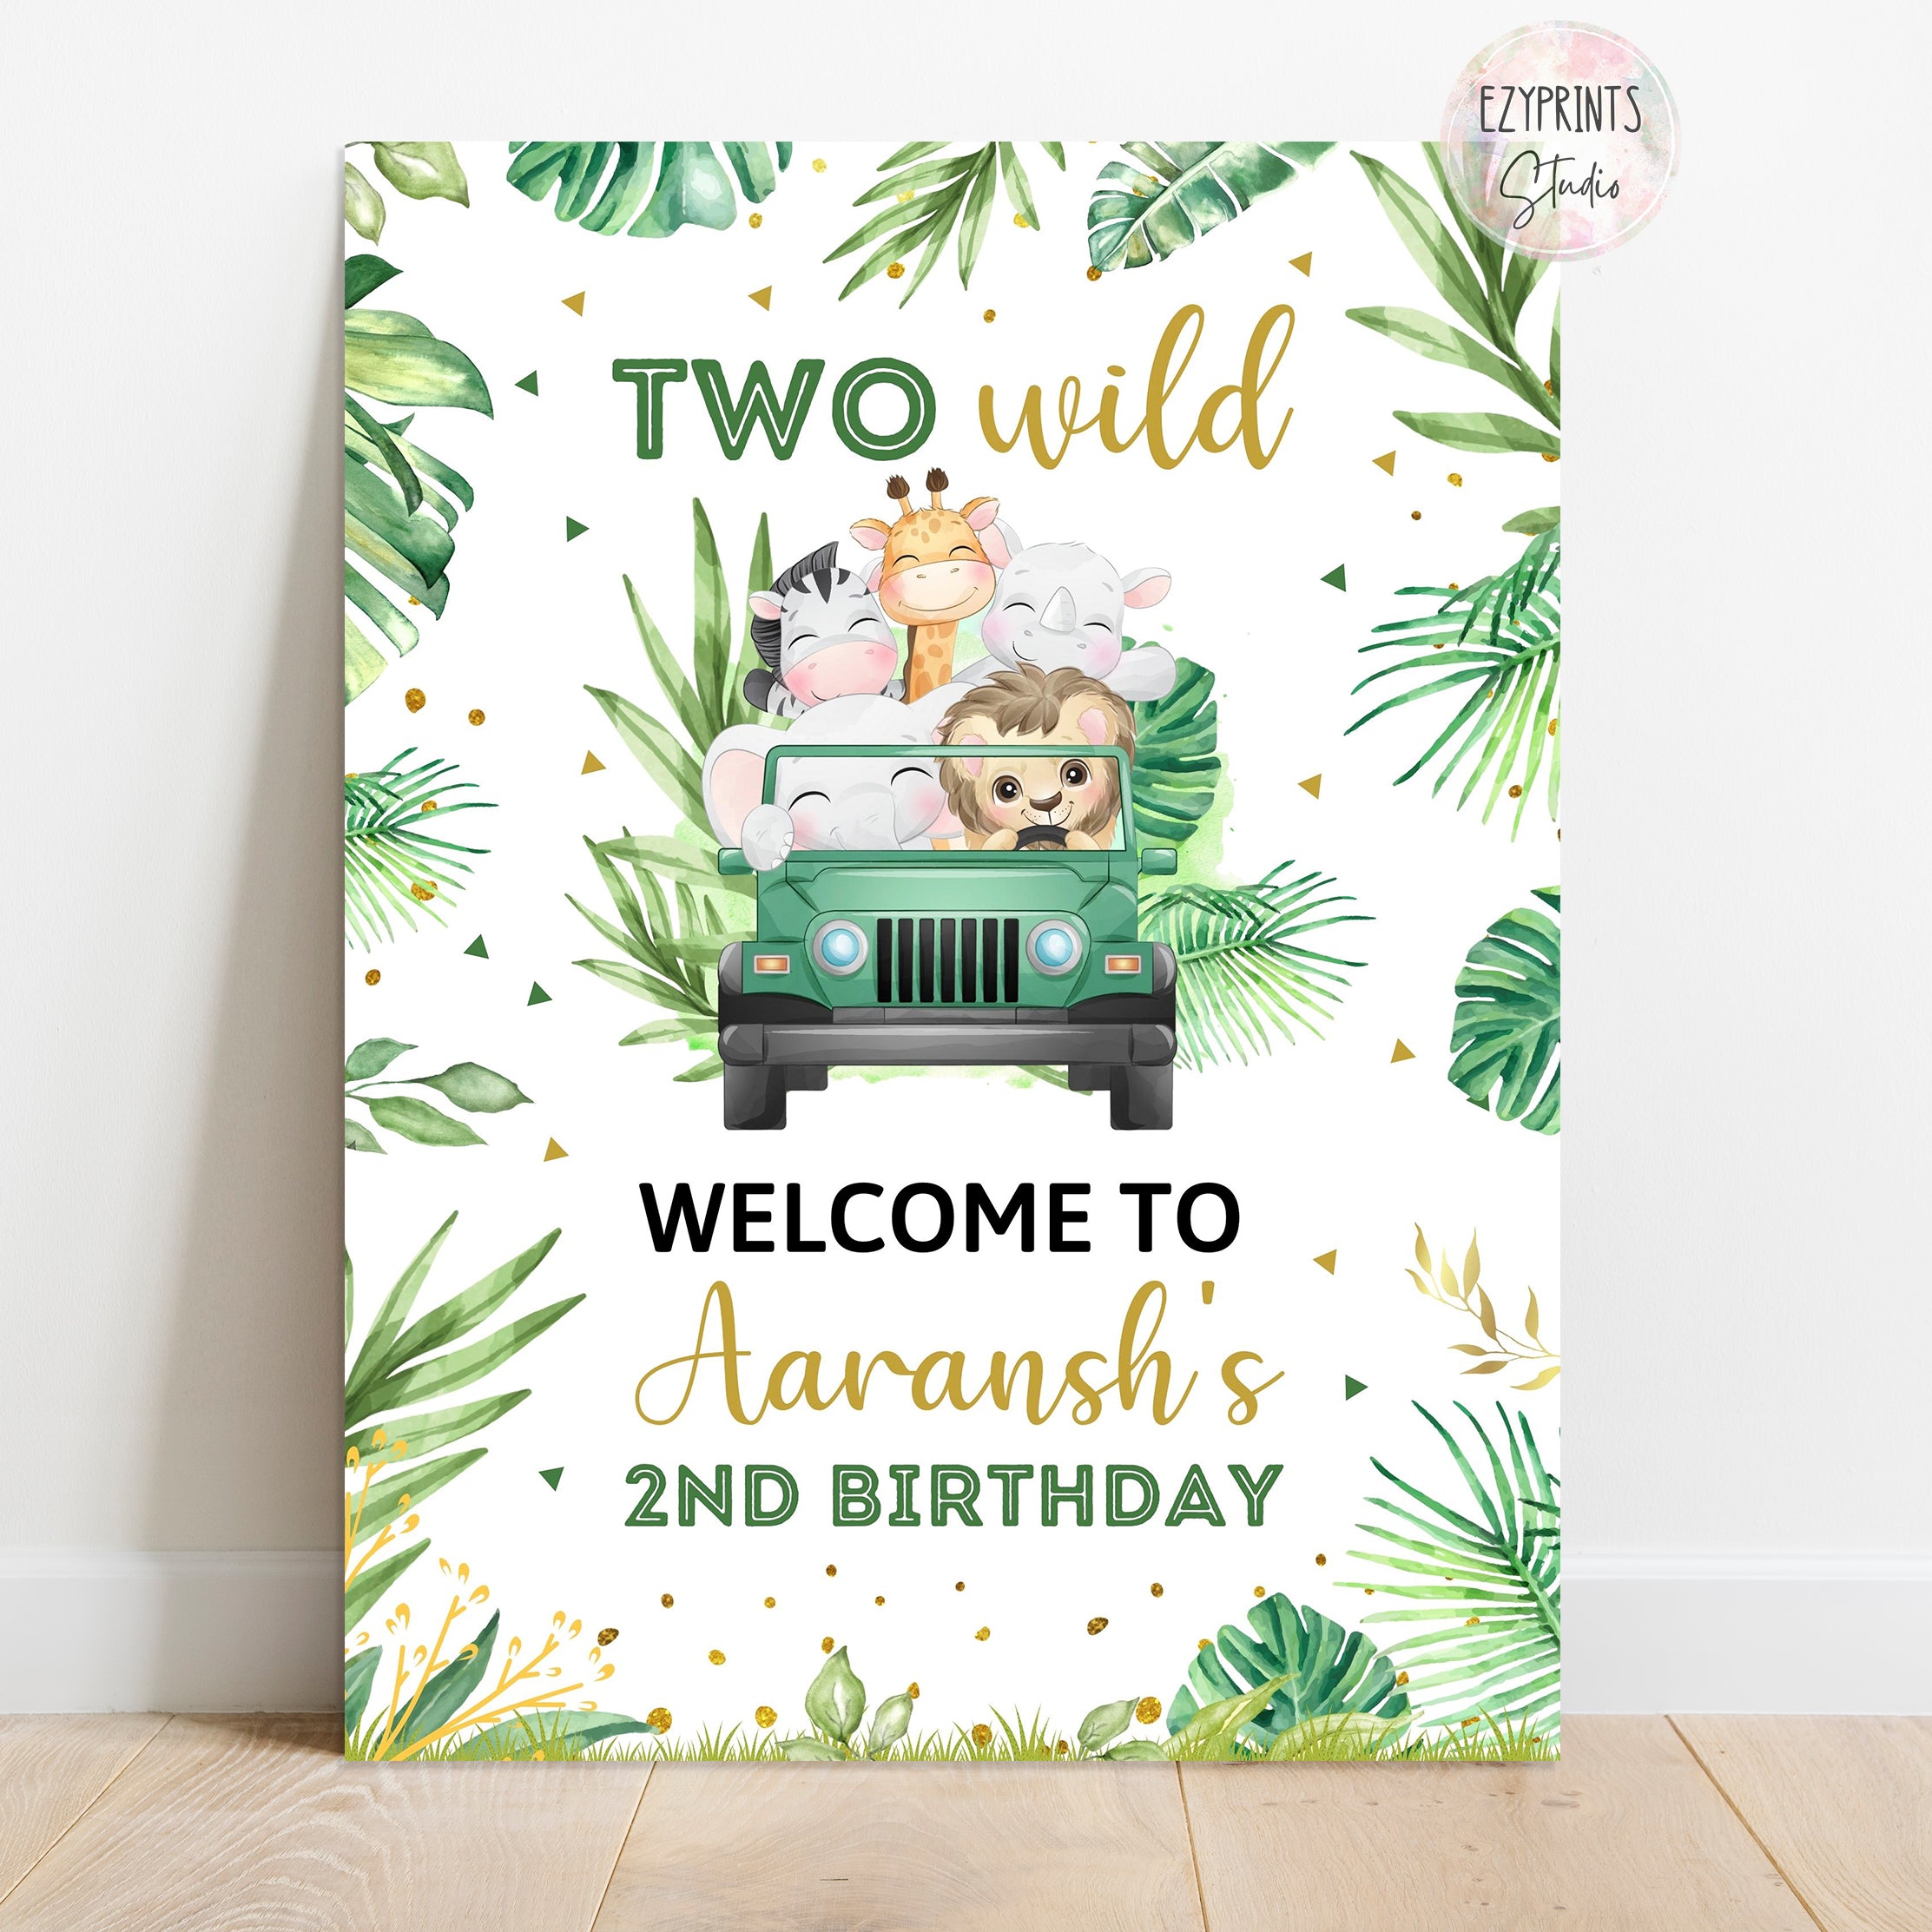 Two Wild Animals Safari Birthday Party Welcome Board